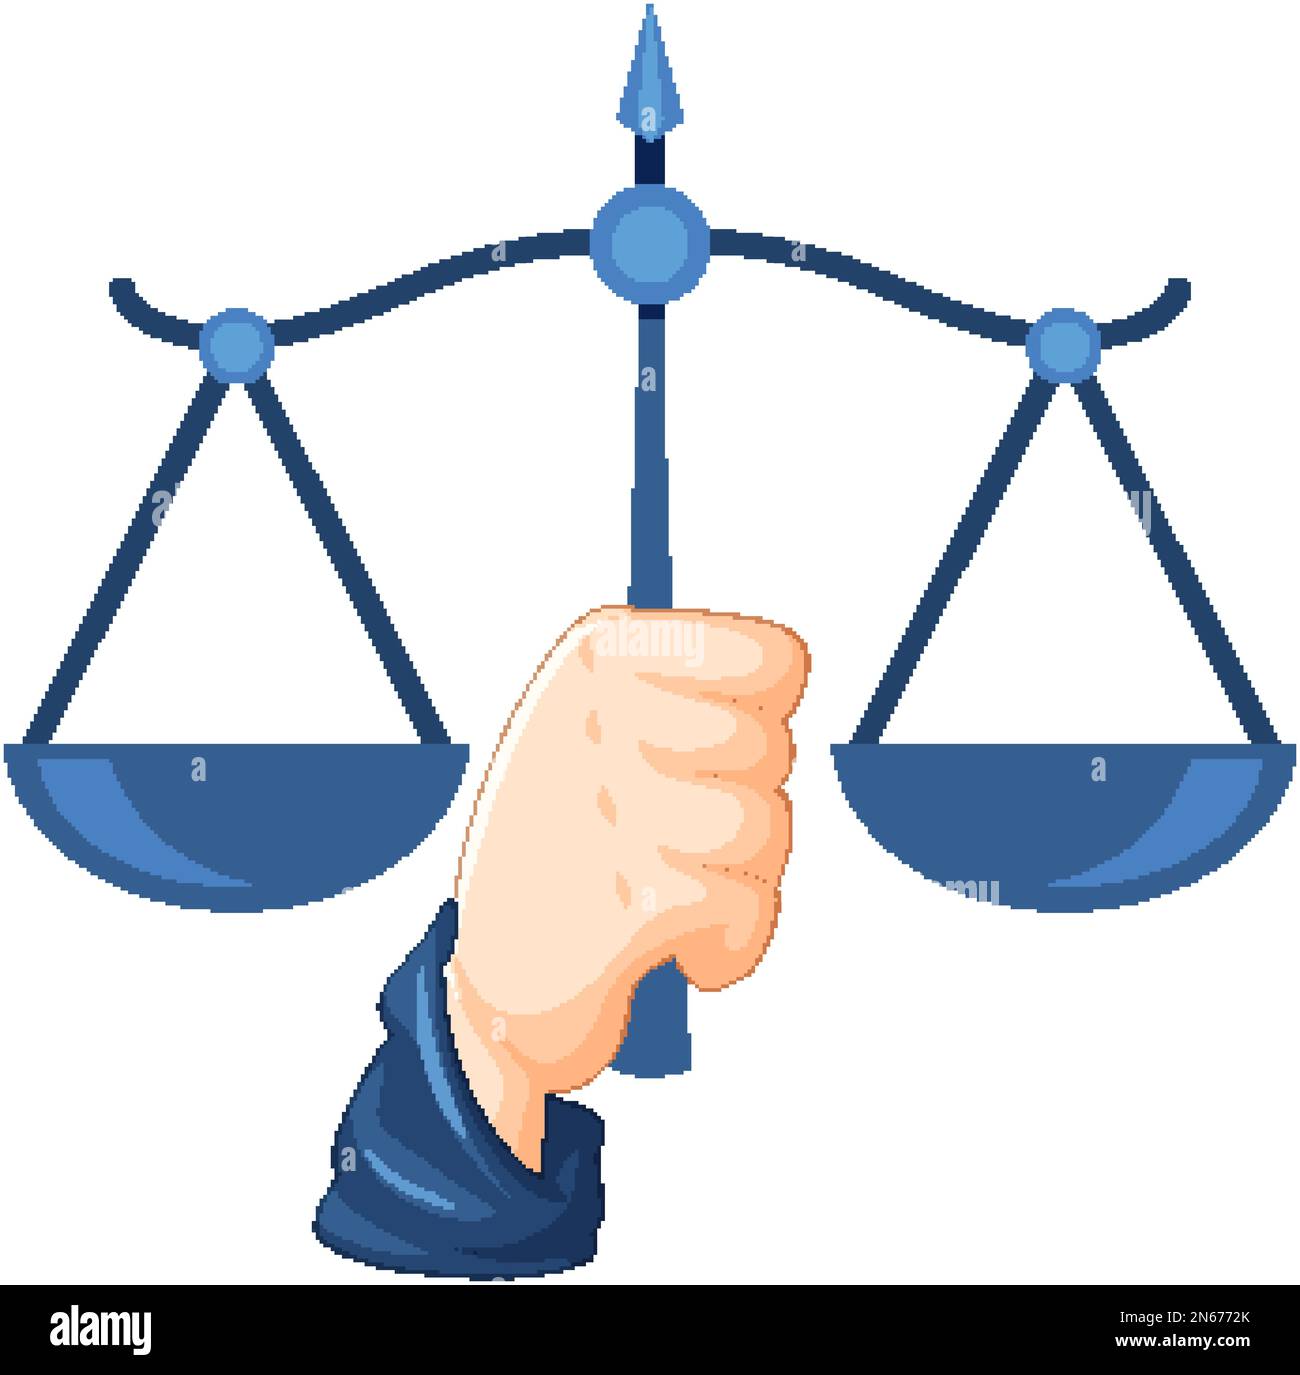 https://c8.alamy.com/comp/2N6772K/legal-justice-balance-scale-icon-illustration-2N6772K.jpg